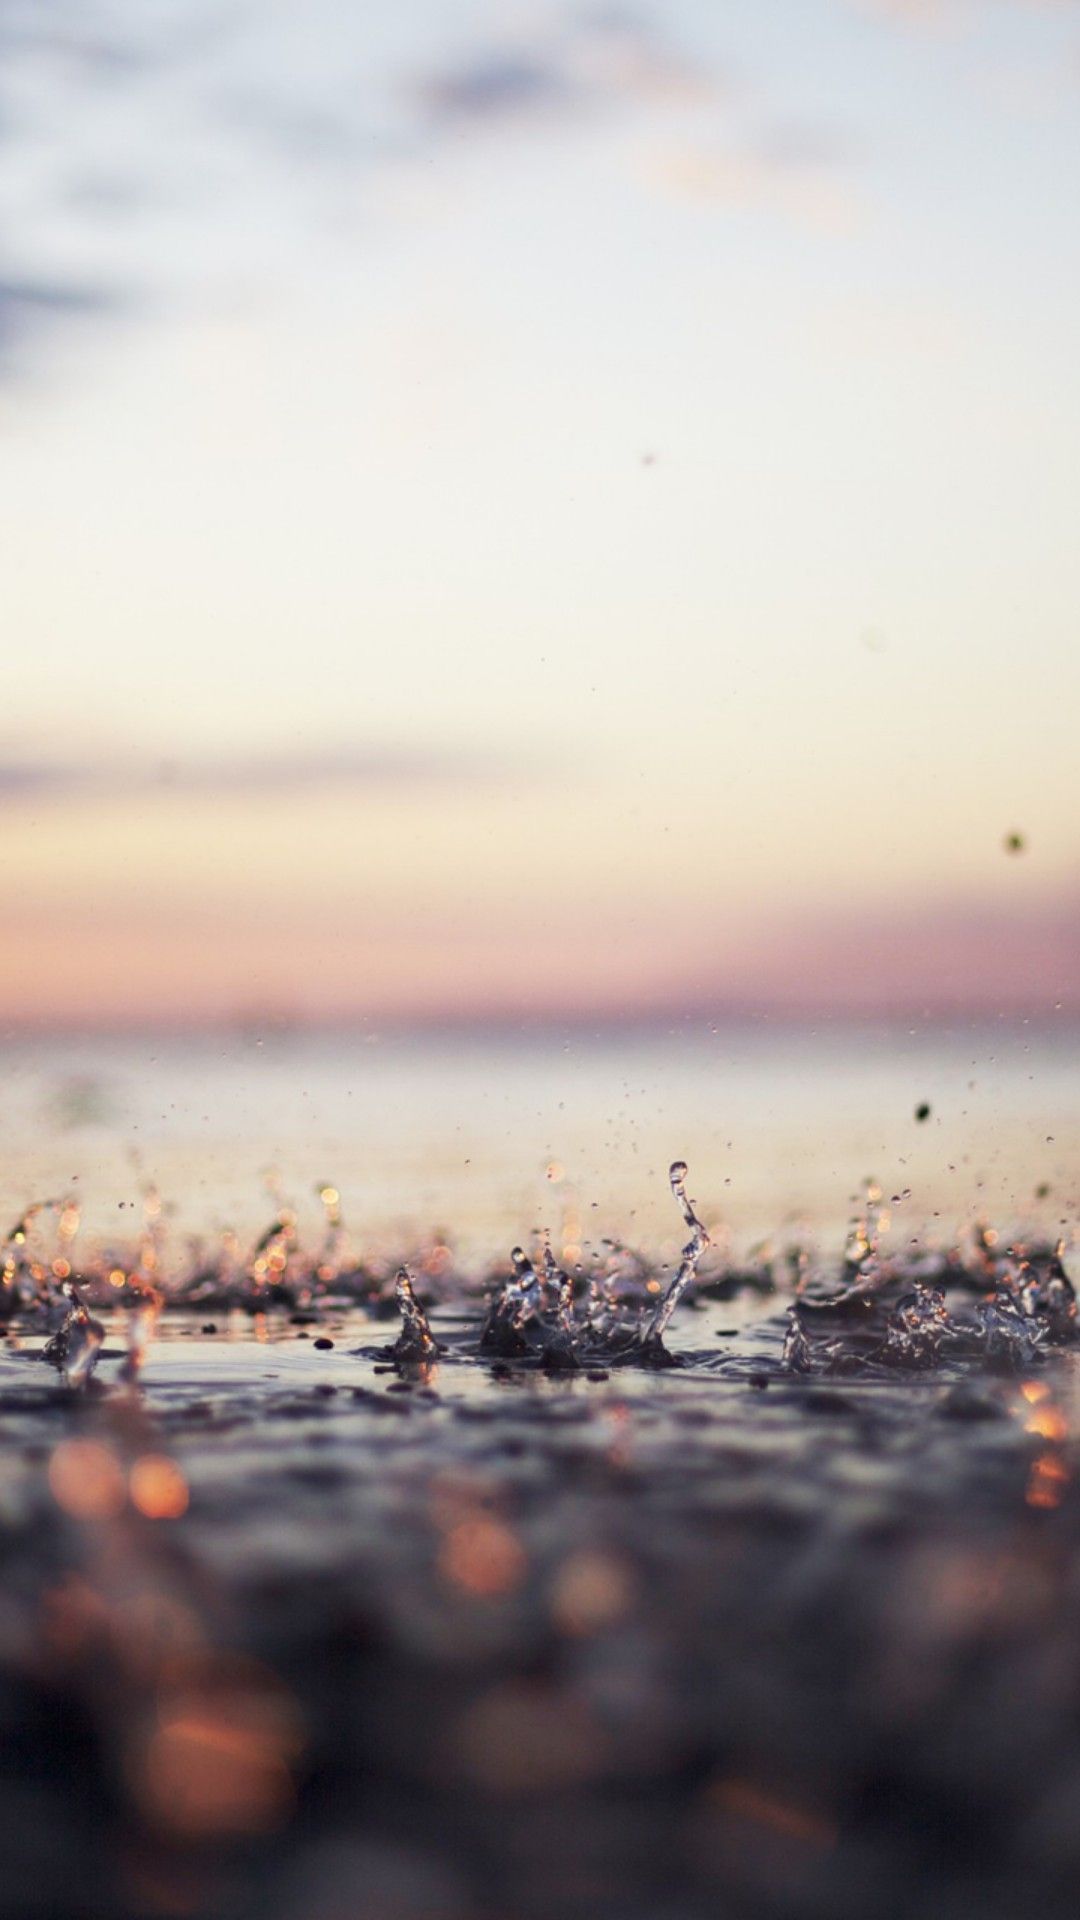 IPhone wallpaper of water splashing on the beach at sunset - Summer